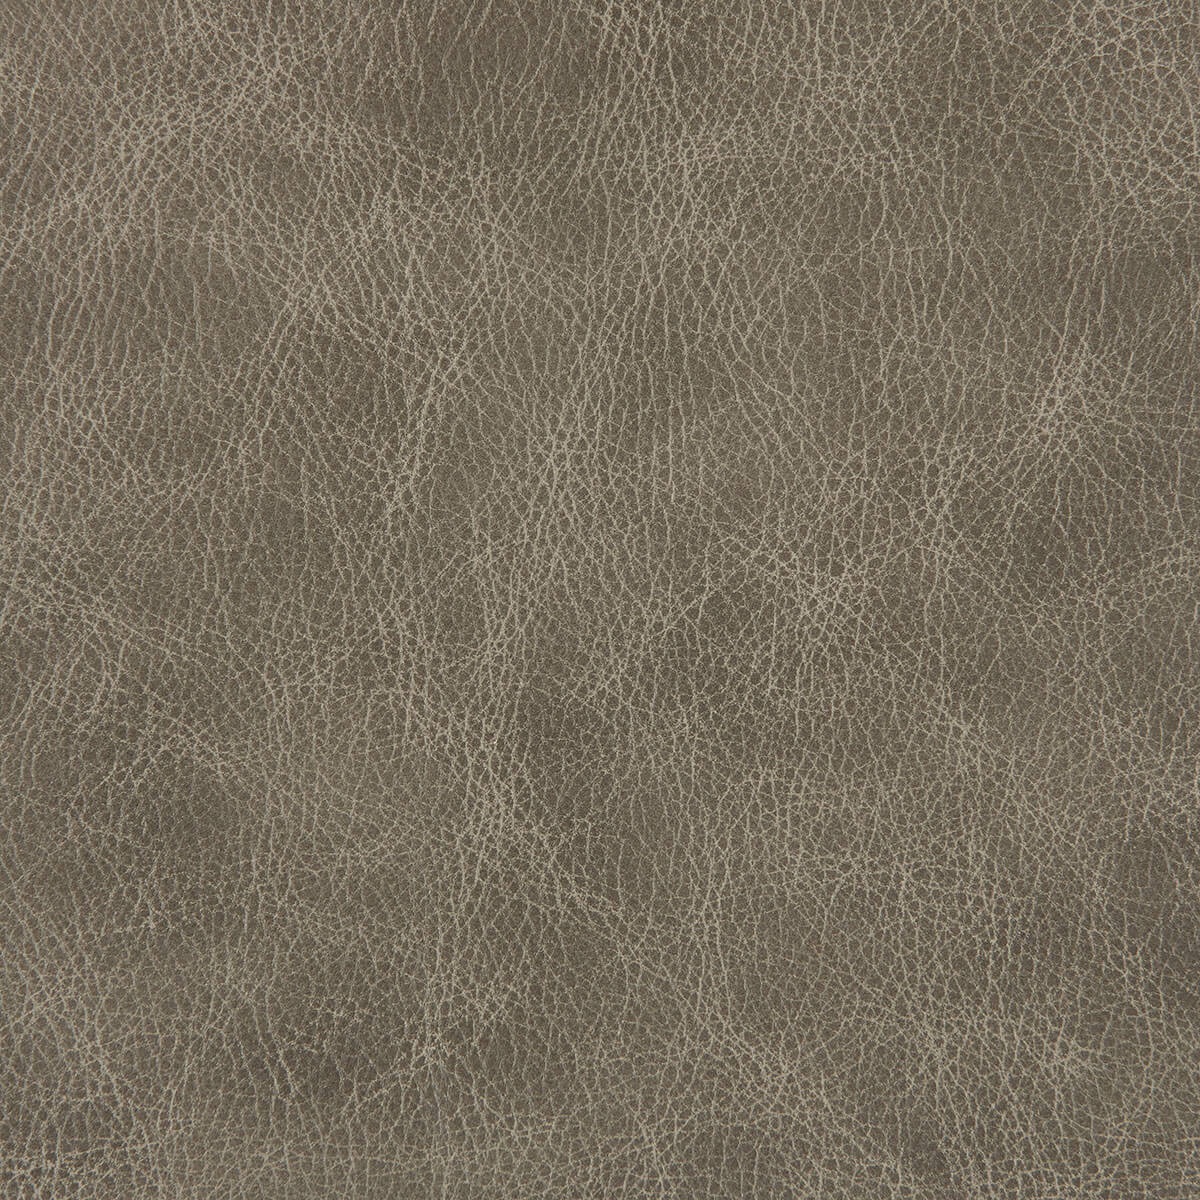 Fossil-Heartland Leather